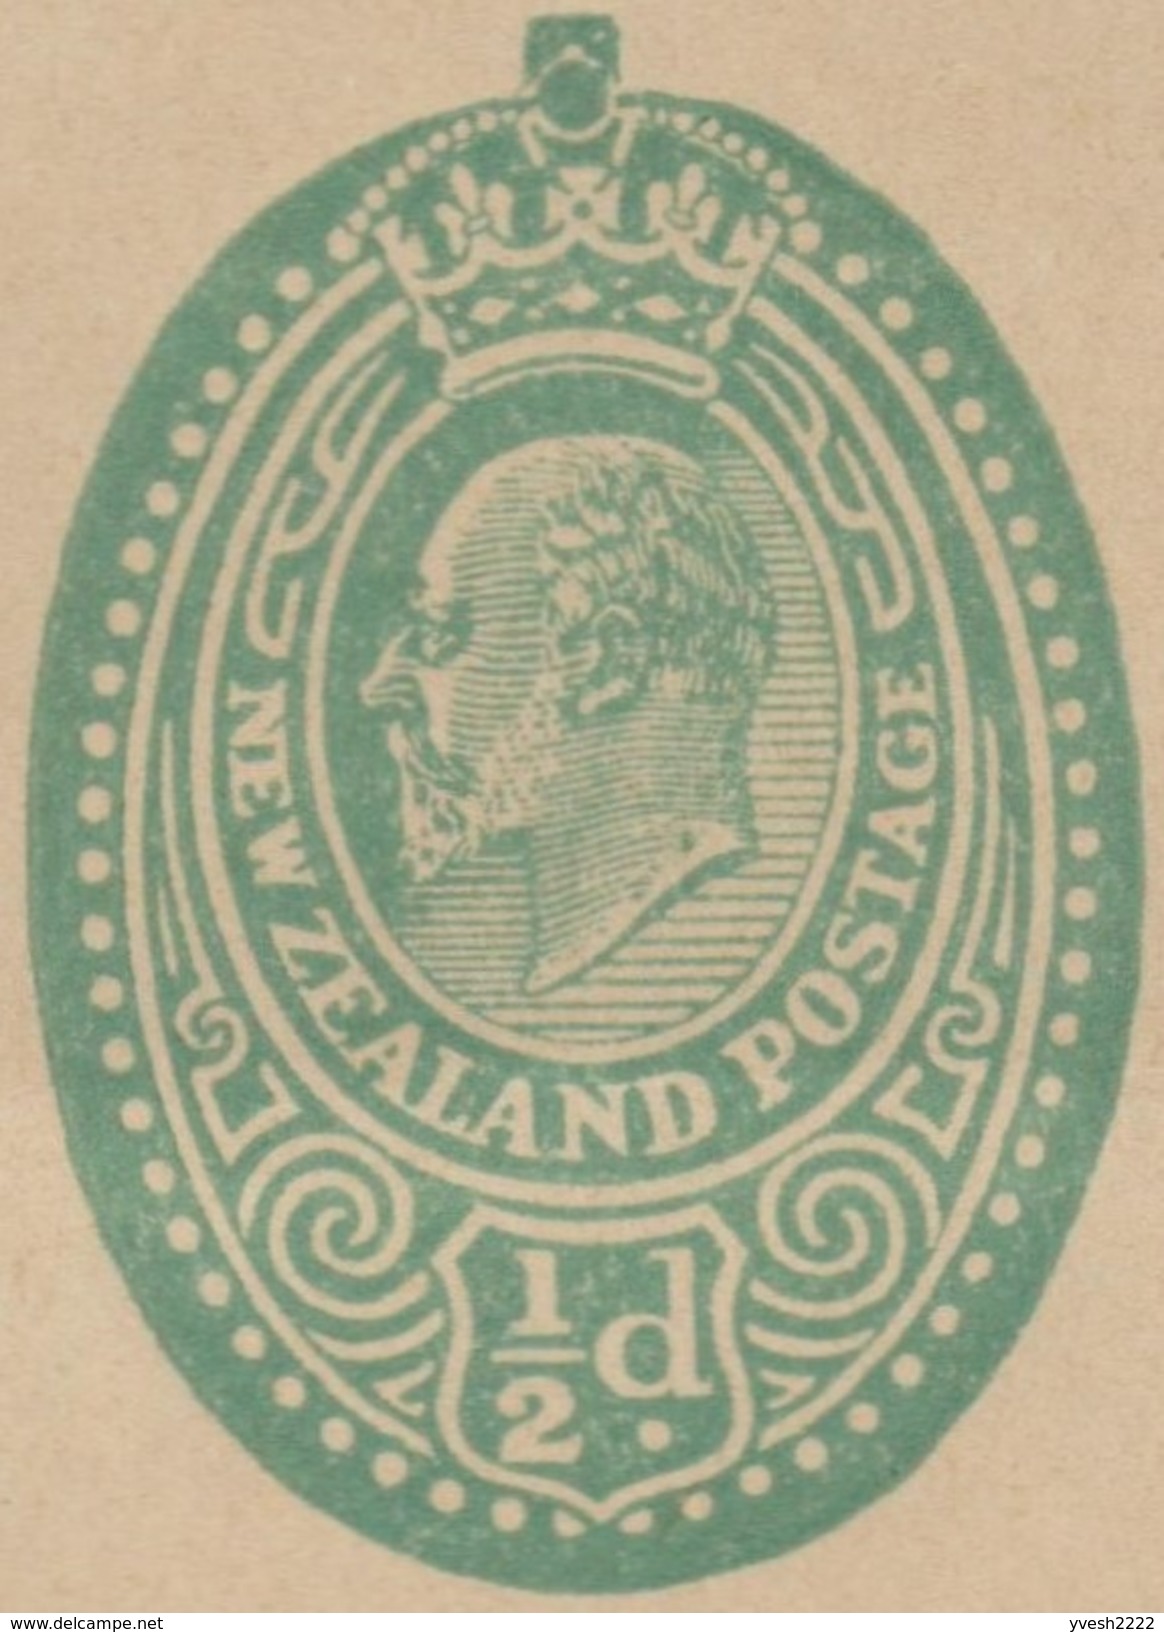 Nouvelle-Zélande Vers 1908. Entier Postal, Bande-journal Édouard VII » (Edward VII). Fraîcheur Exceptionnelle - Postal Stationery